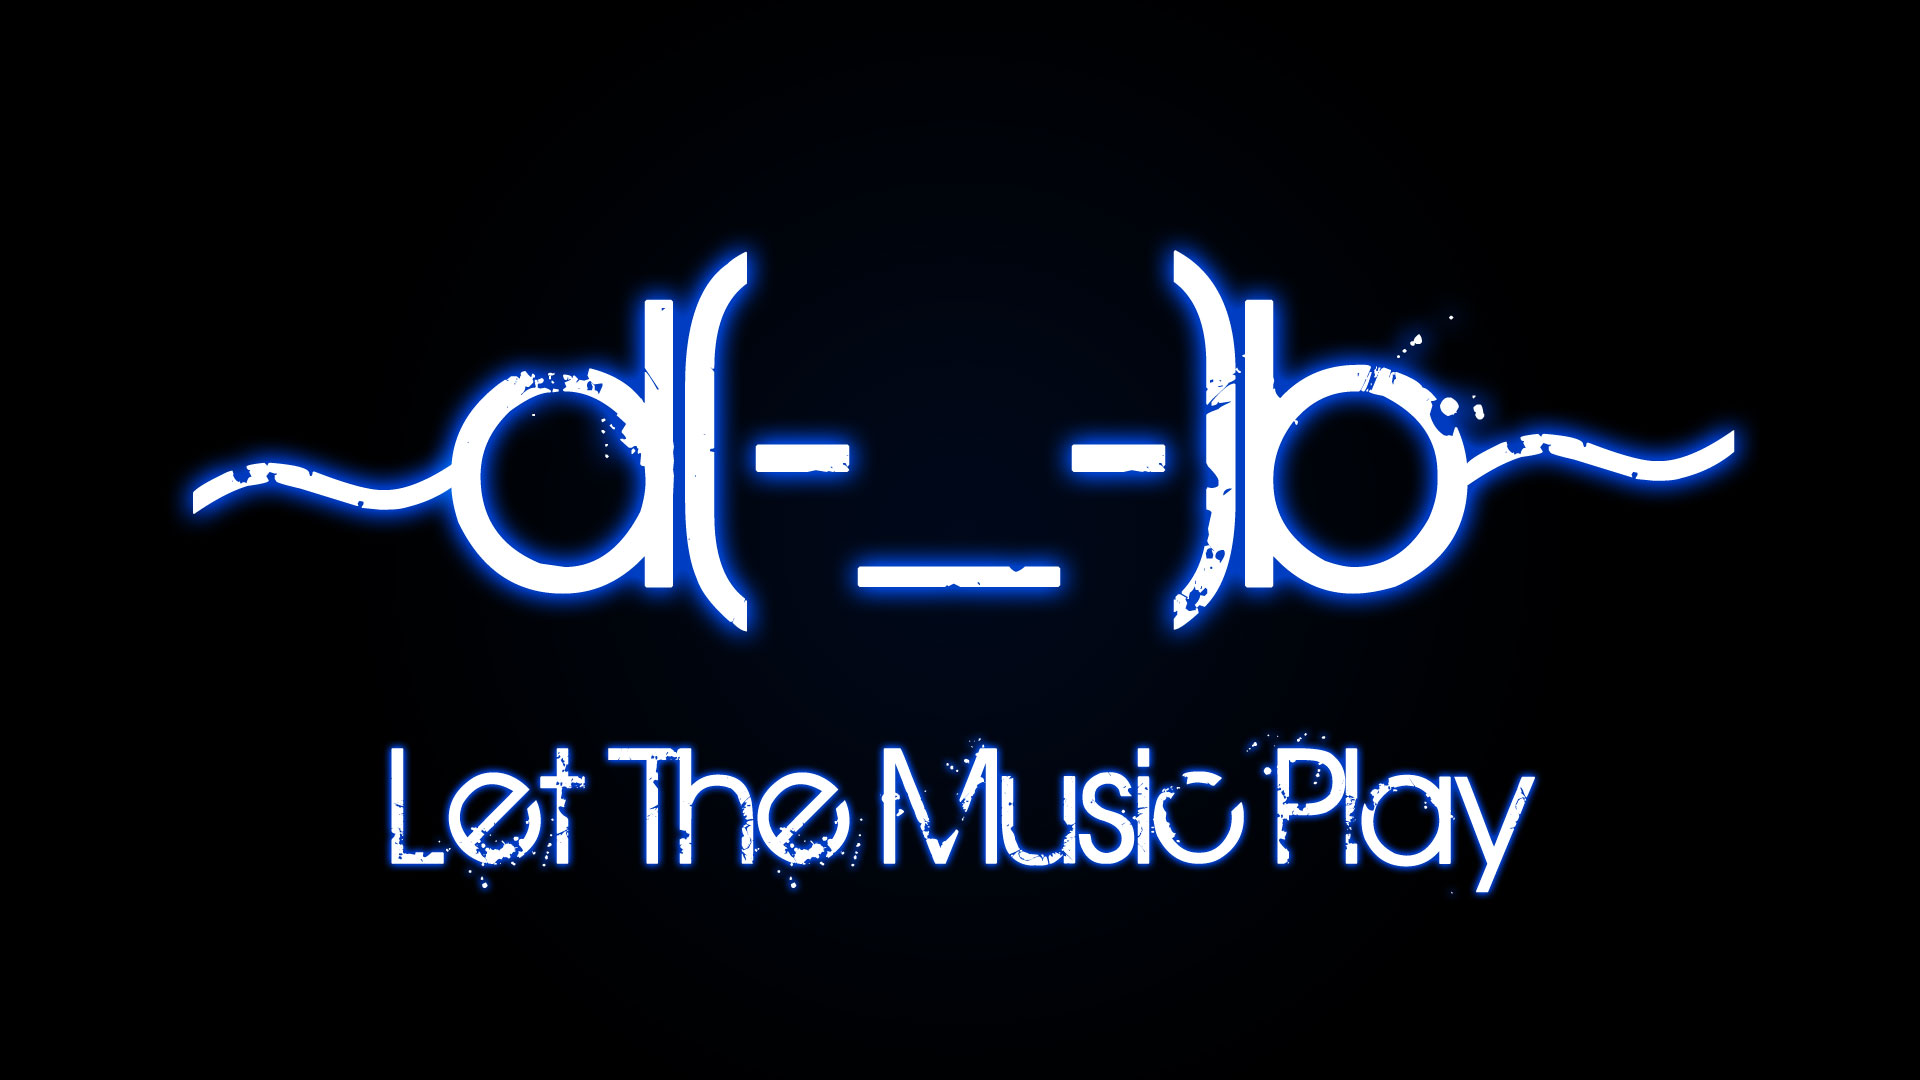 let_the_music_play_by_hafele-d33qgcf.jpg